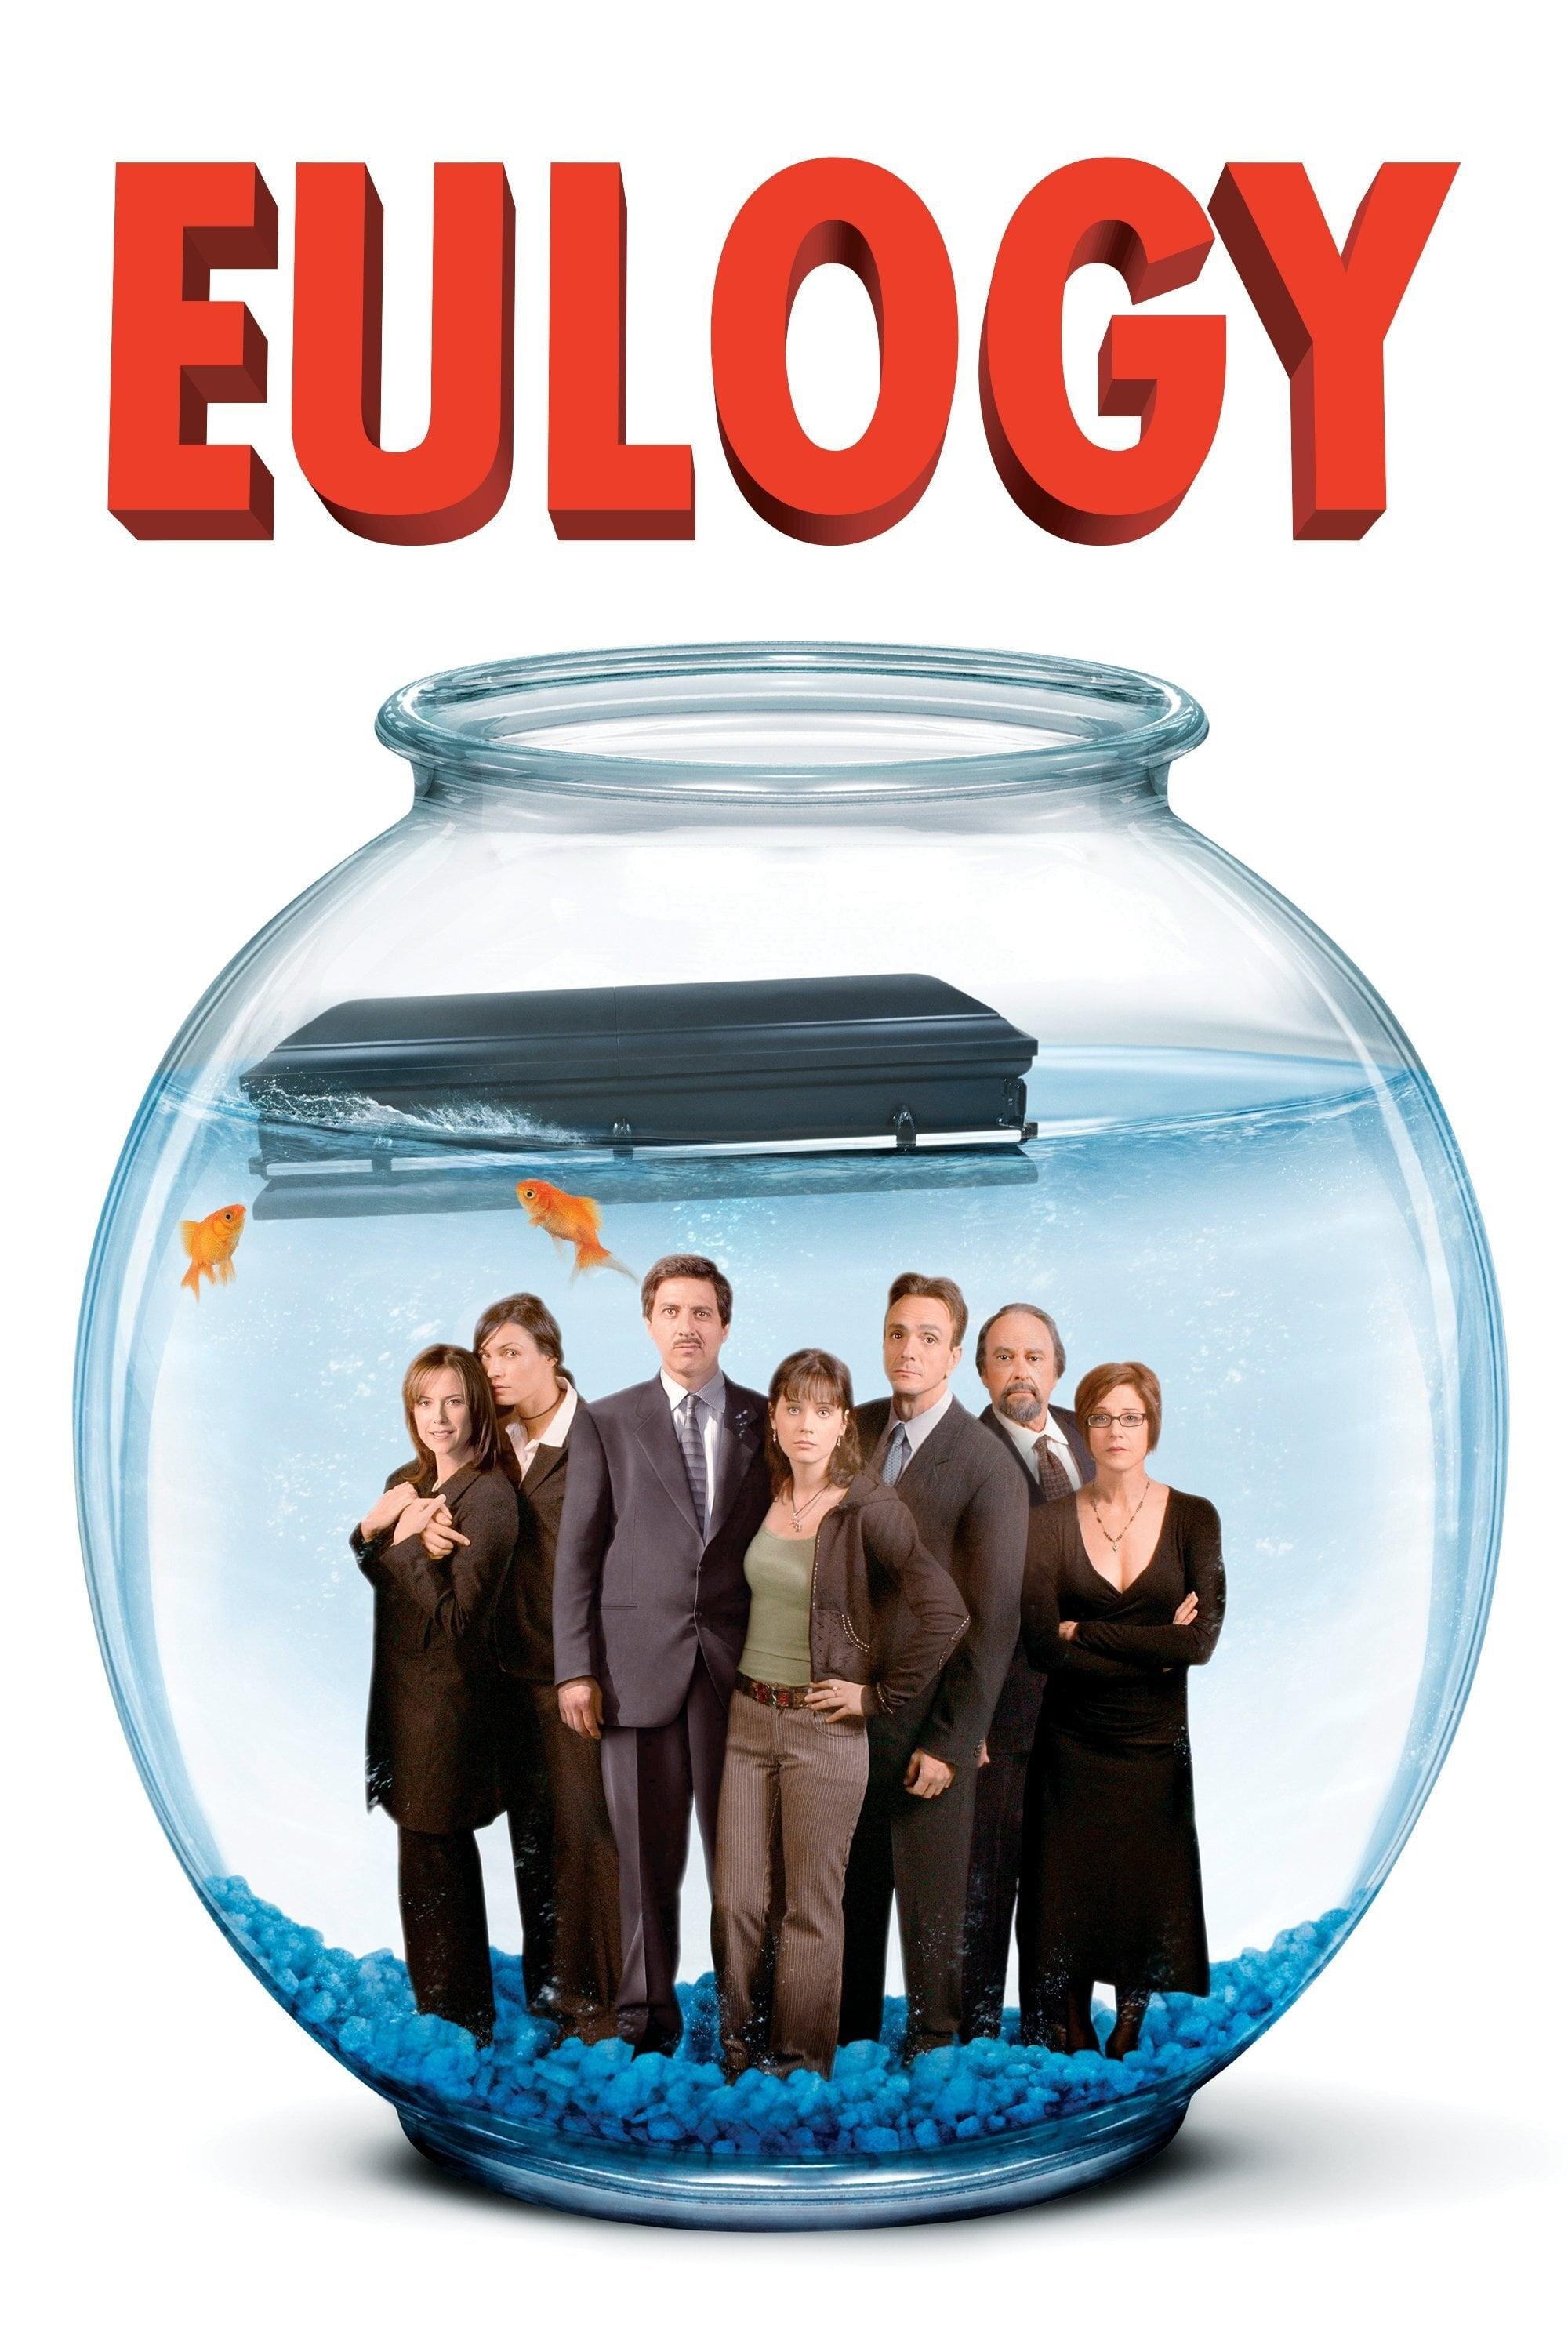 Eulogy poster